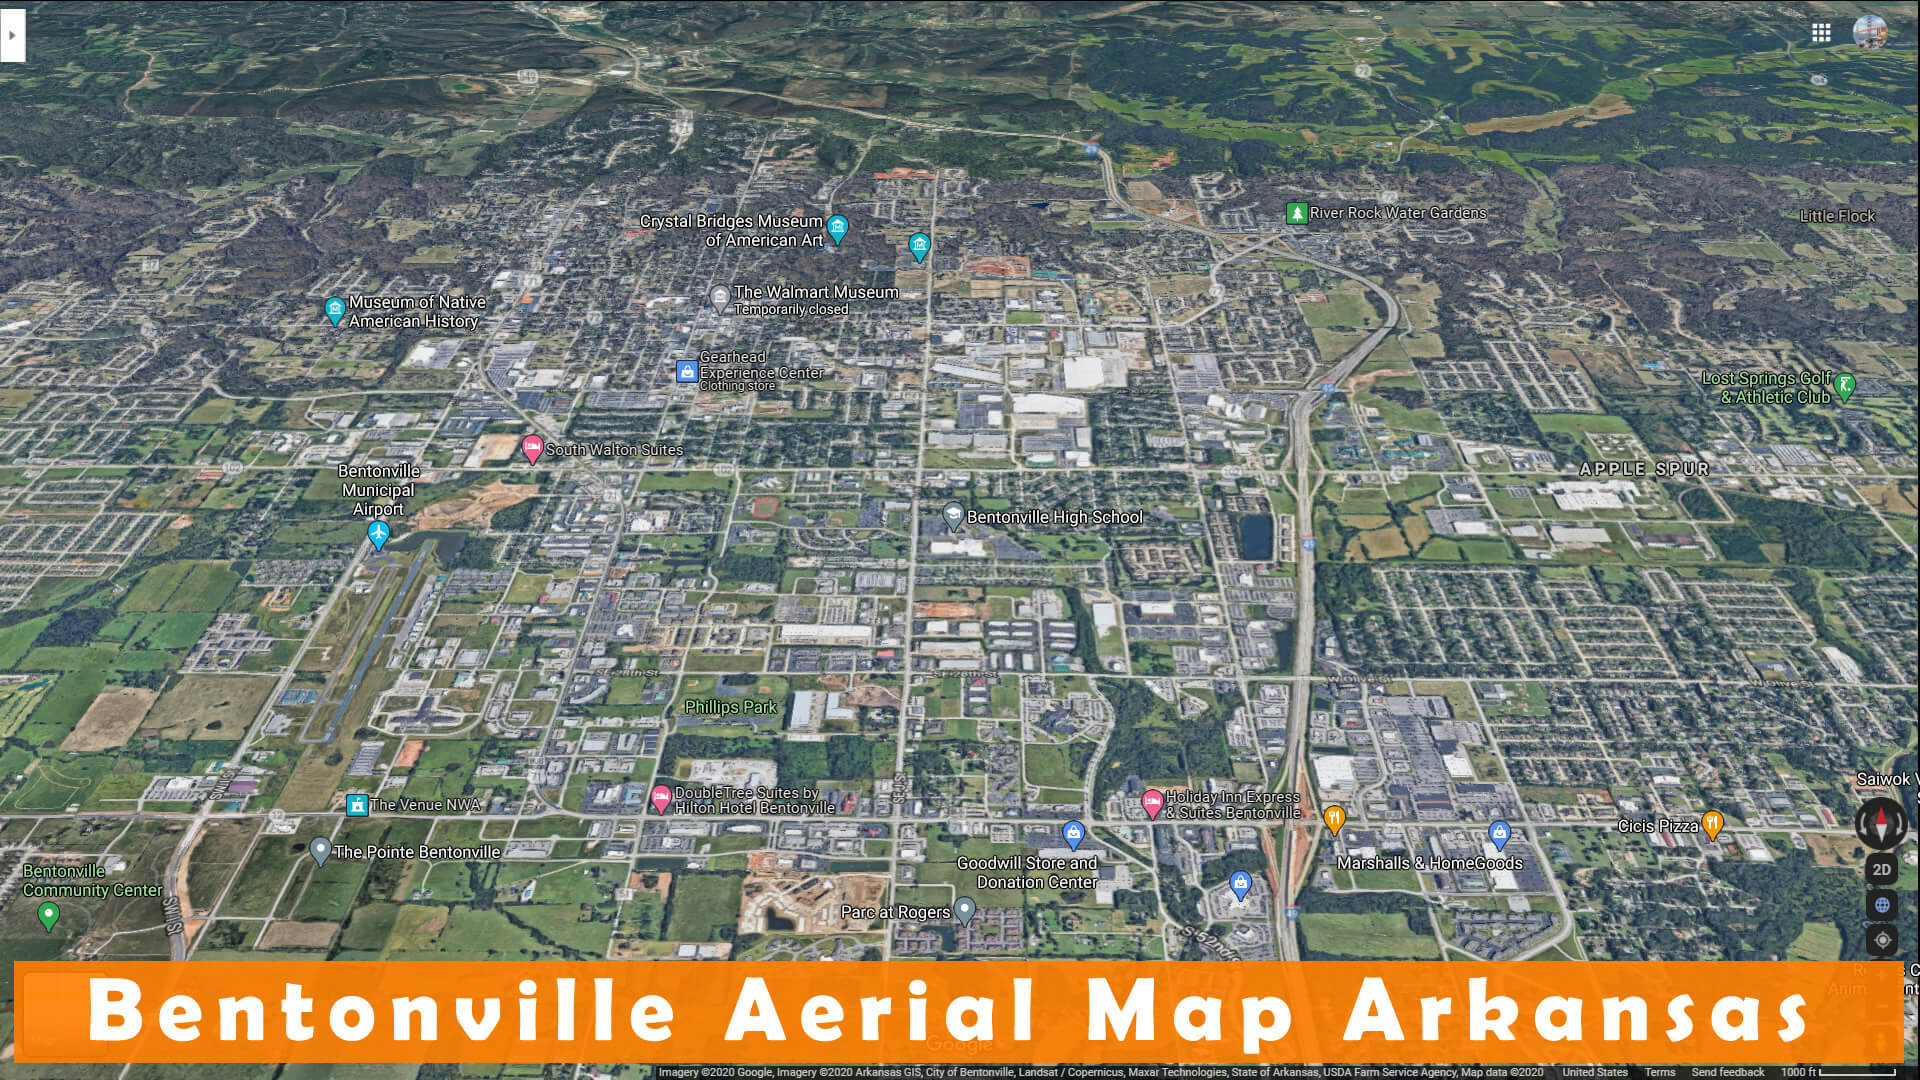 Bentonville Aerial Map Arkansas